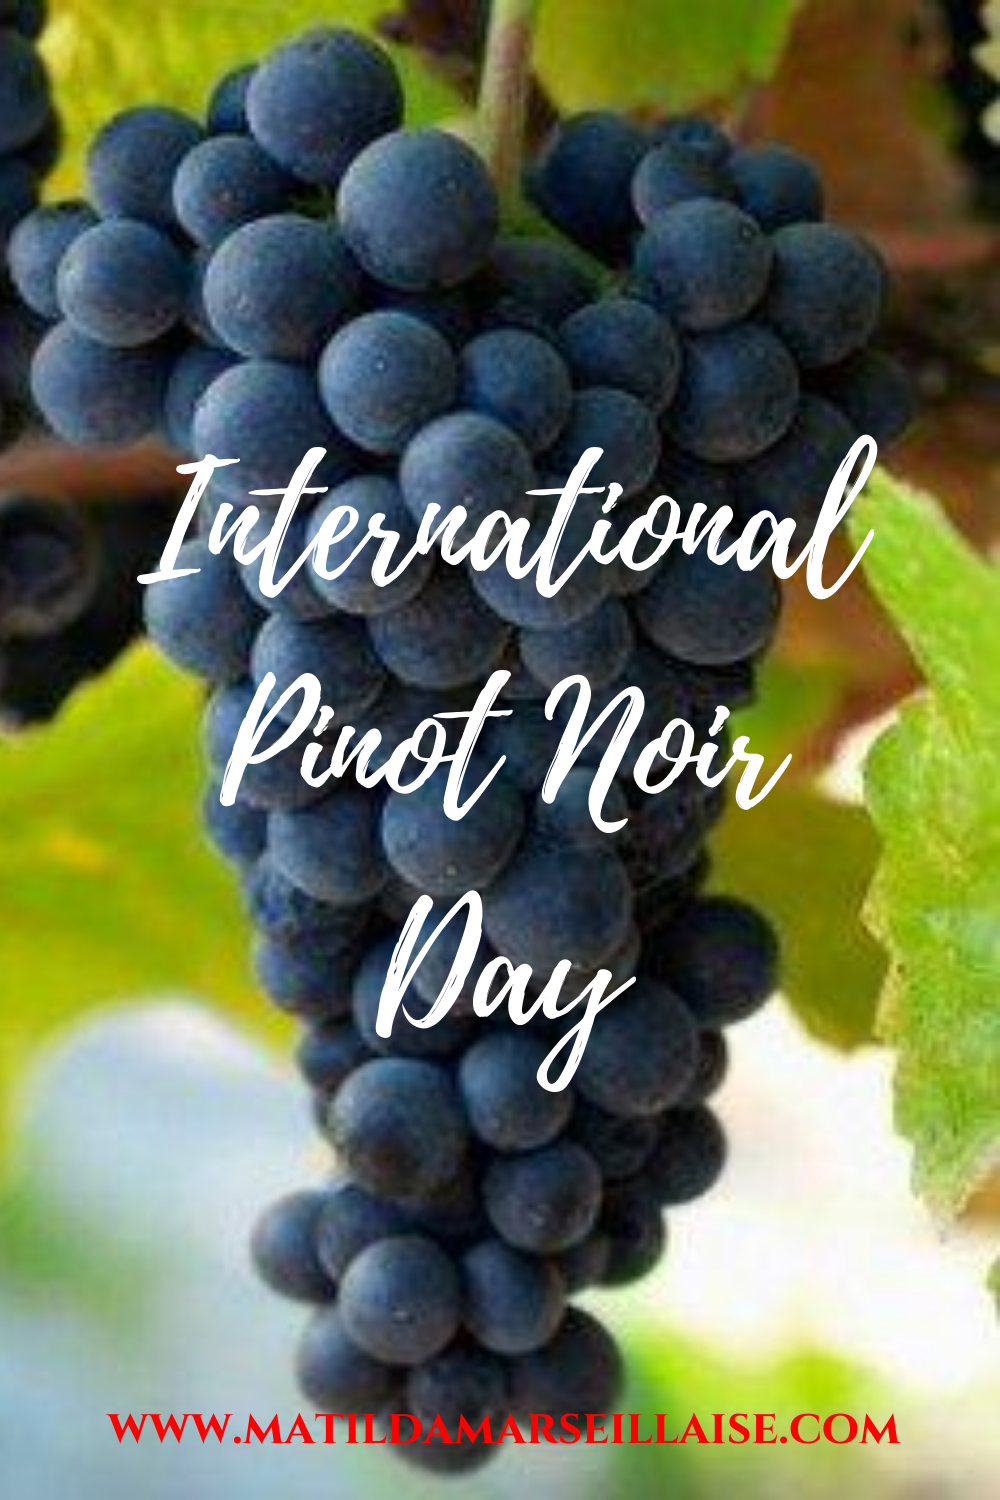 Today is International Pinot Noir Day! Matilda Marseillaise